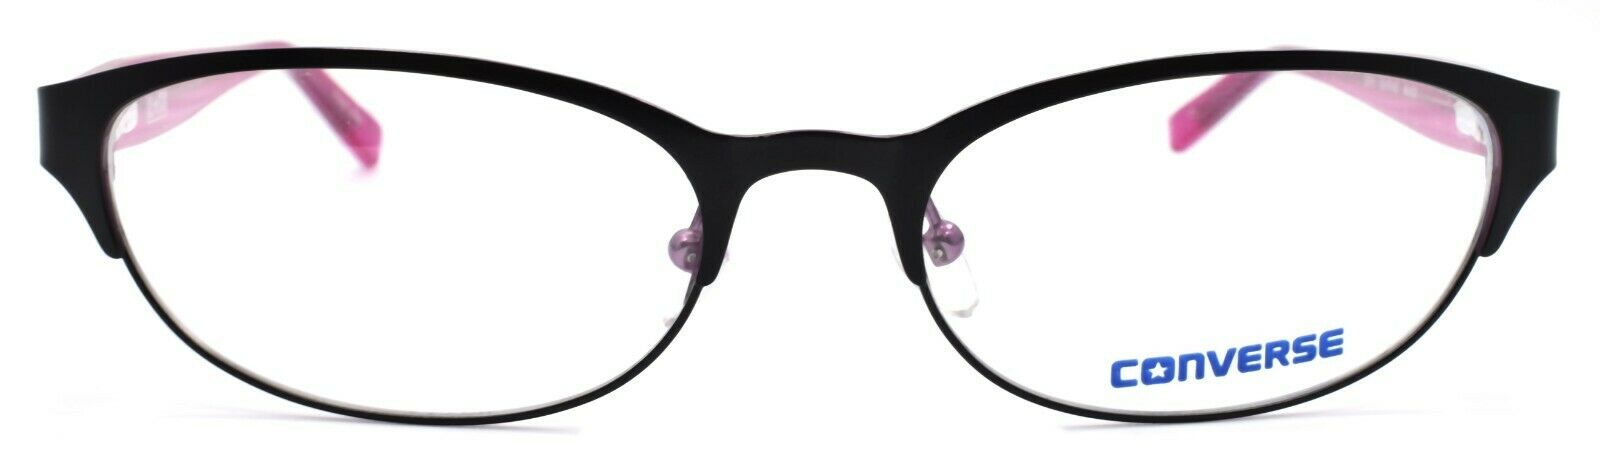 2-CONVERSE Q010 Women's Eyeglasses Frames 52-17-135 Black / Fuchsia + CASE-751286255409-IKSpecs